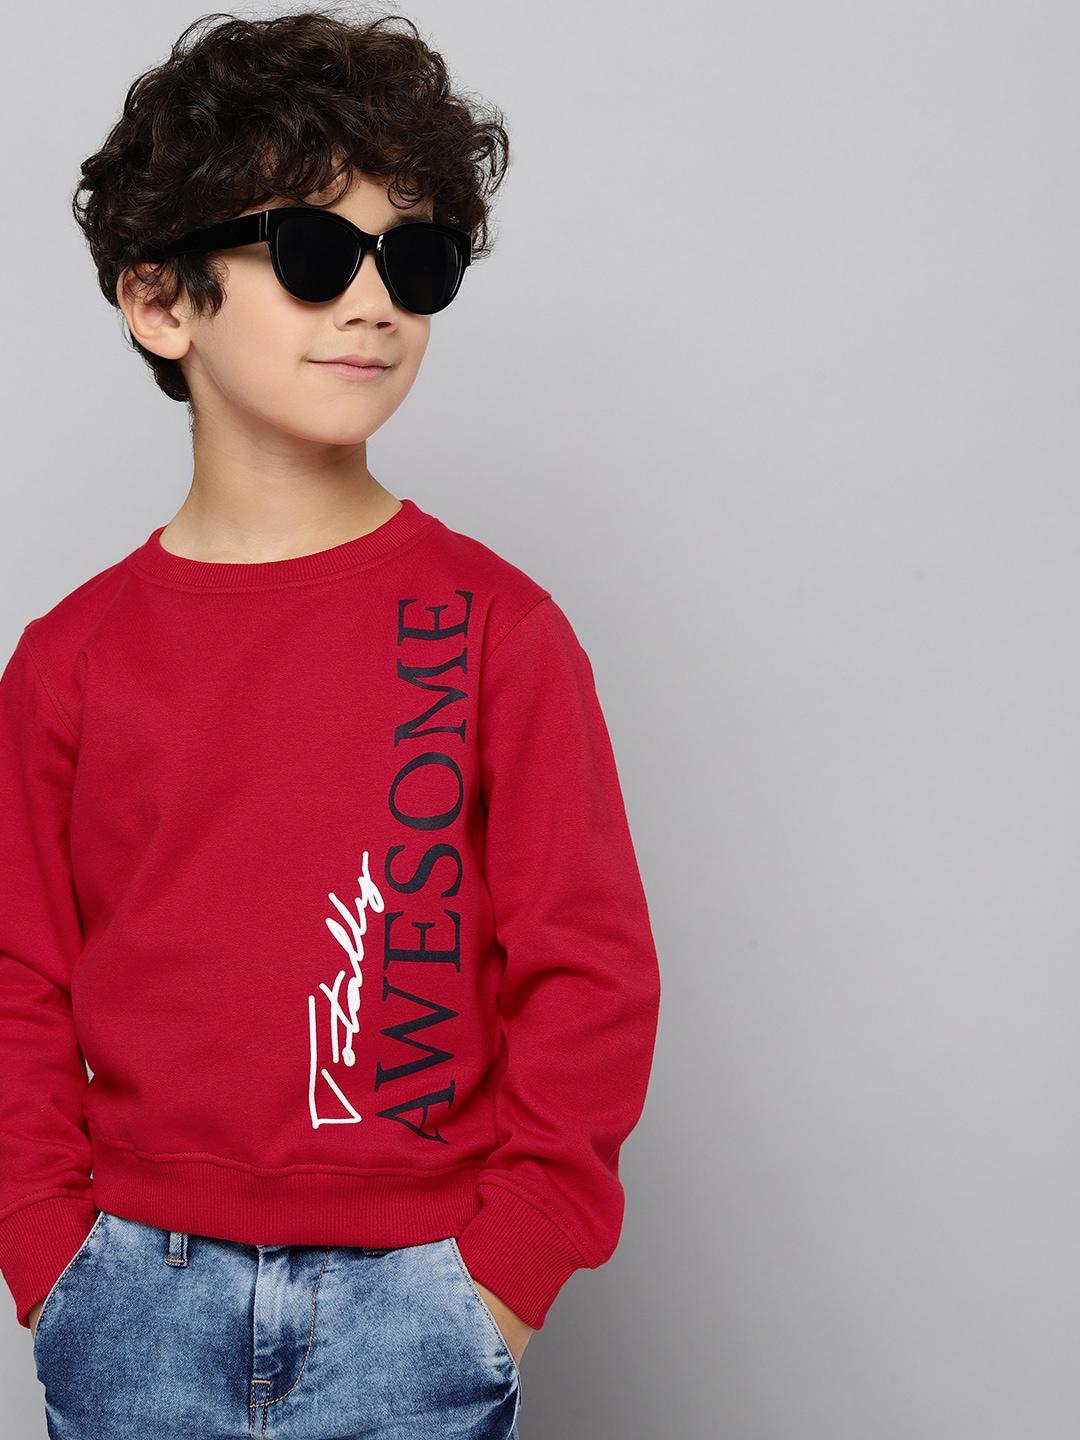 here&now boys red & black typography print sweatshirt